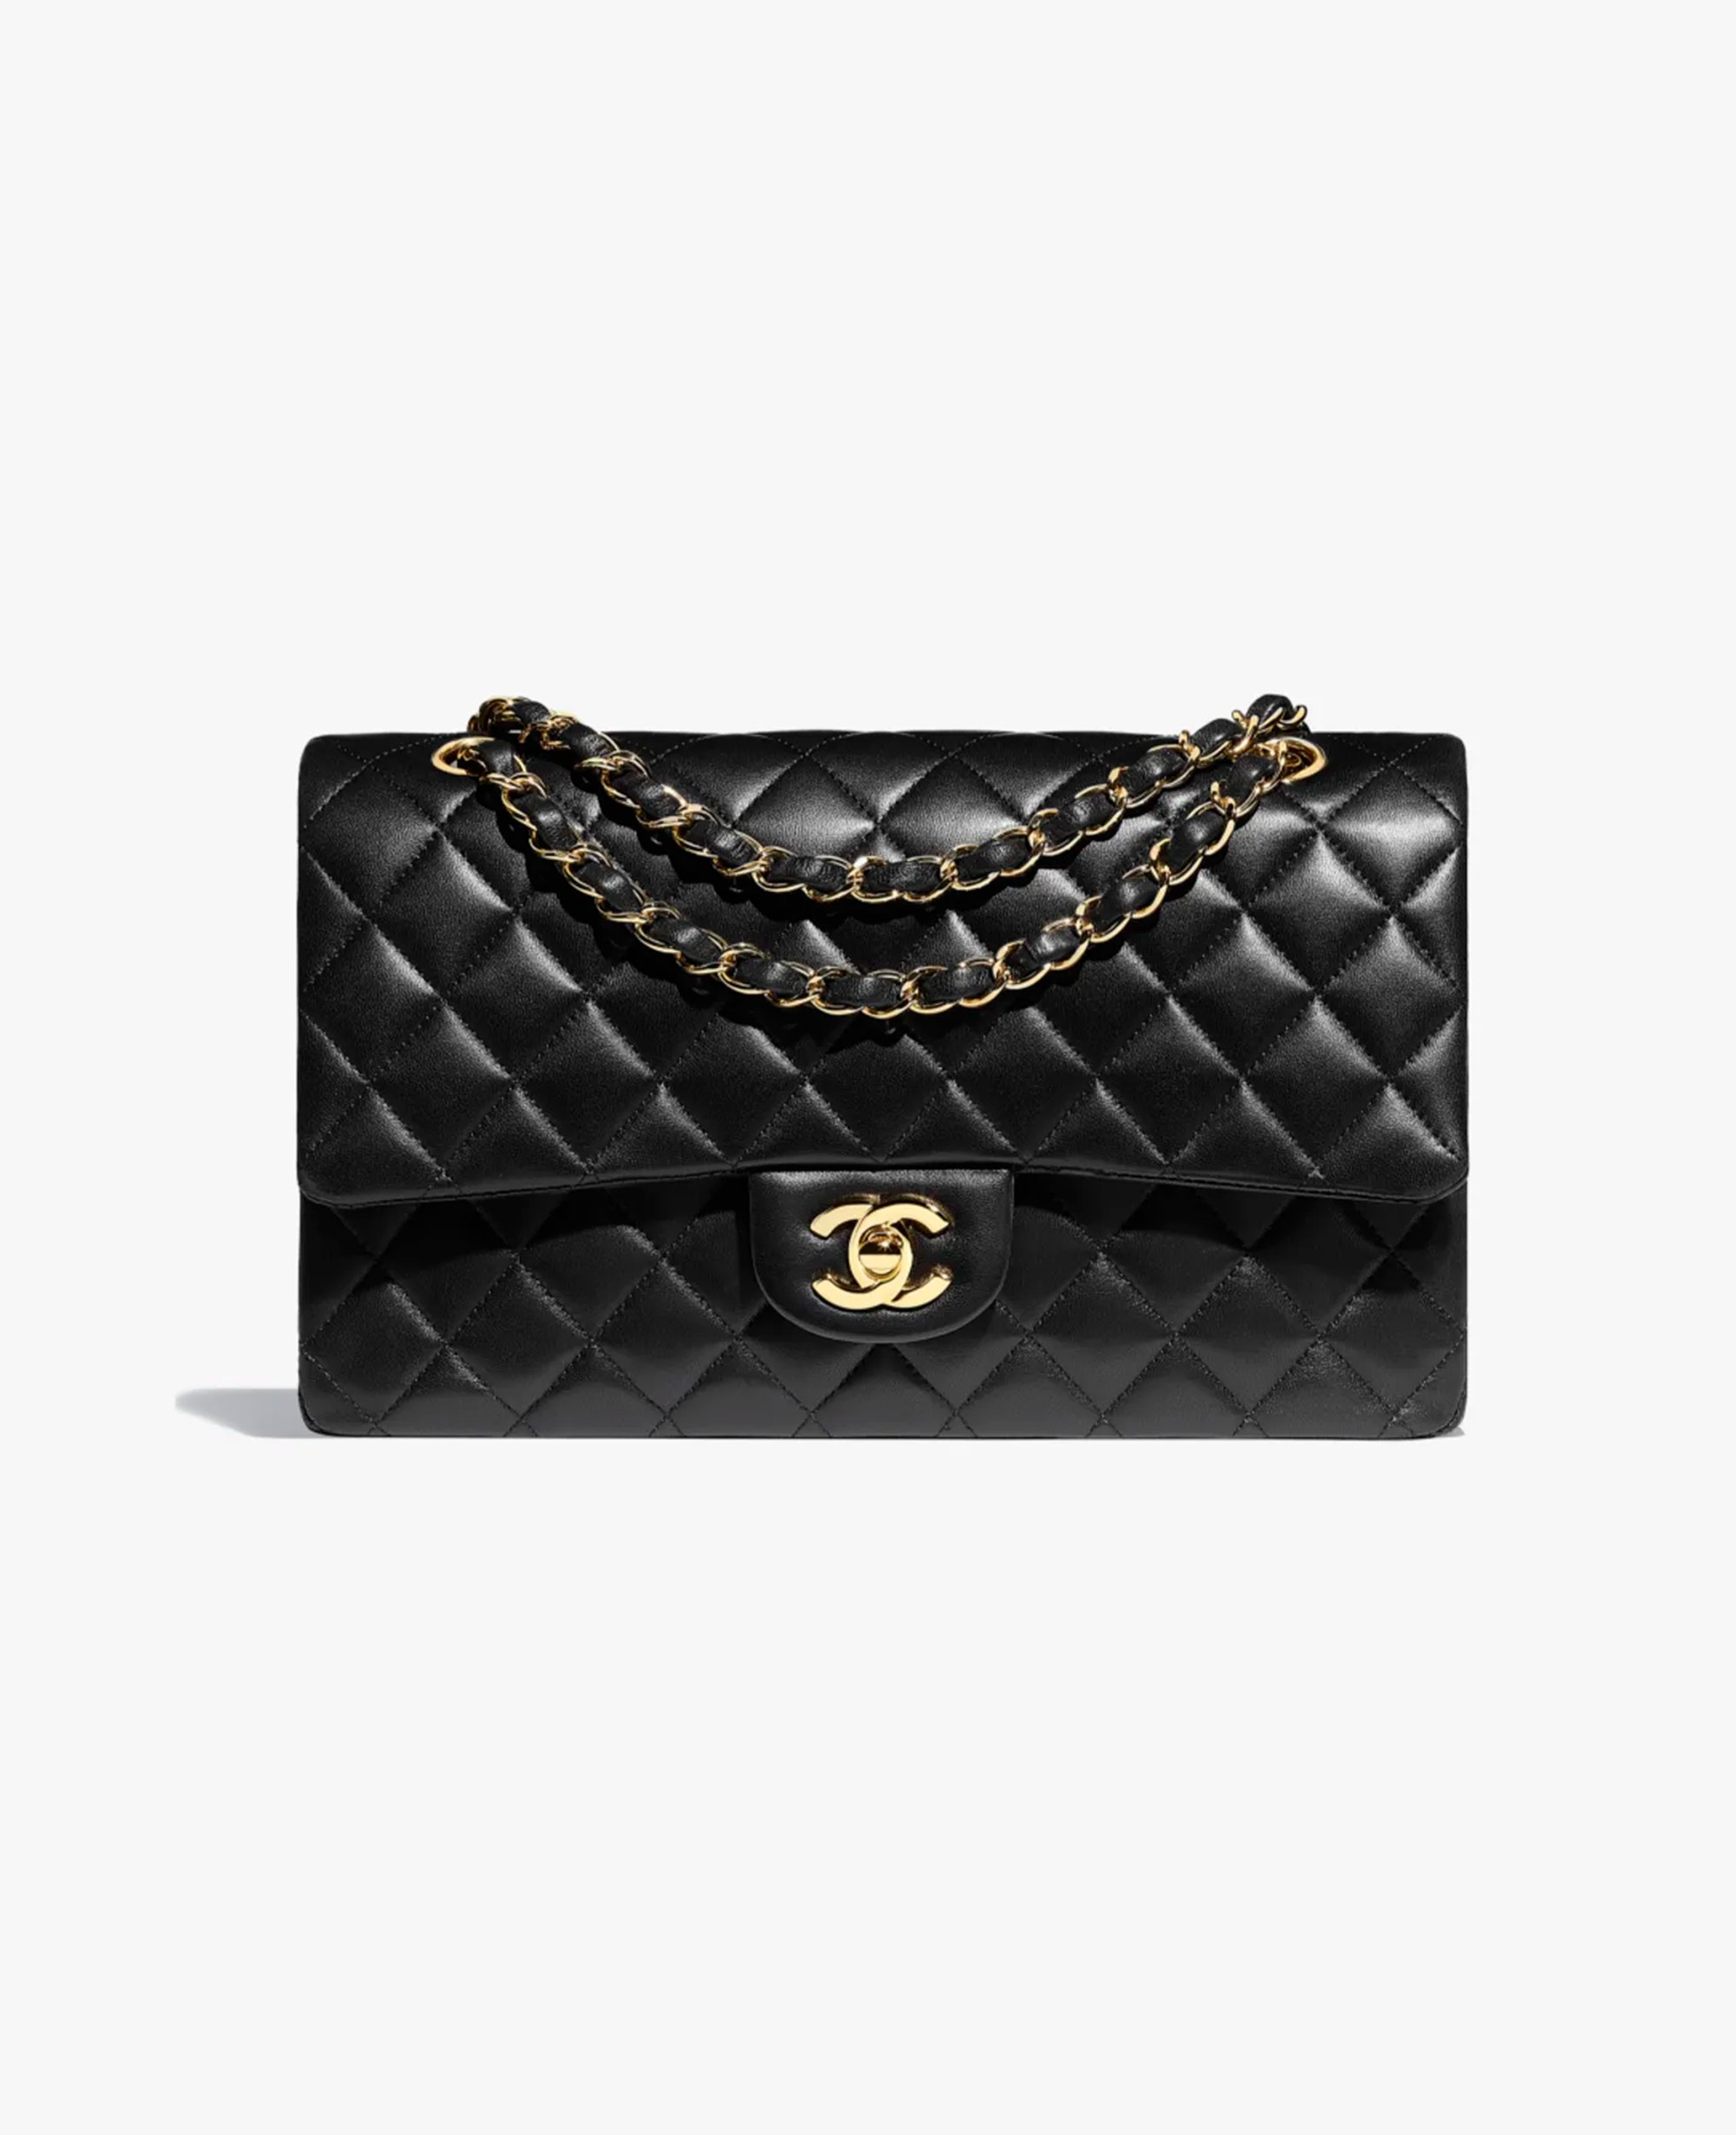 Best Chanel Handbag Dupes, Alternatives, and Look Alikes